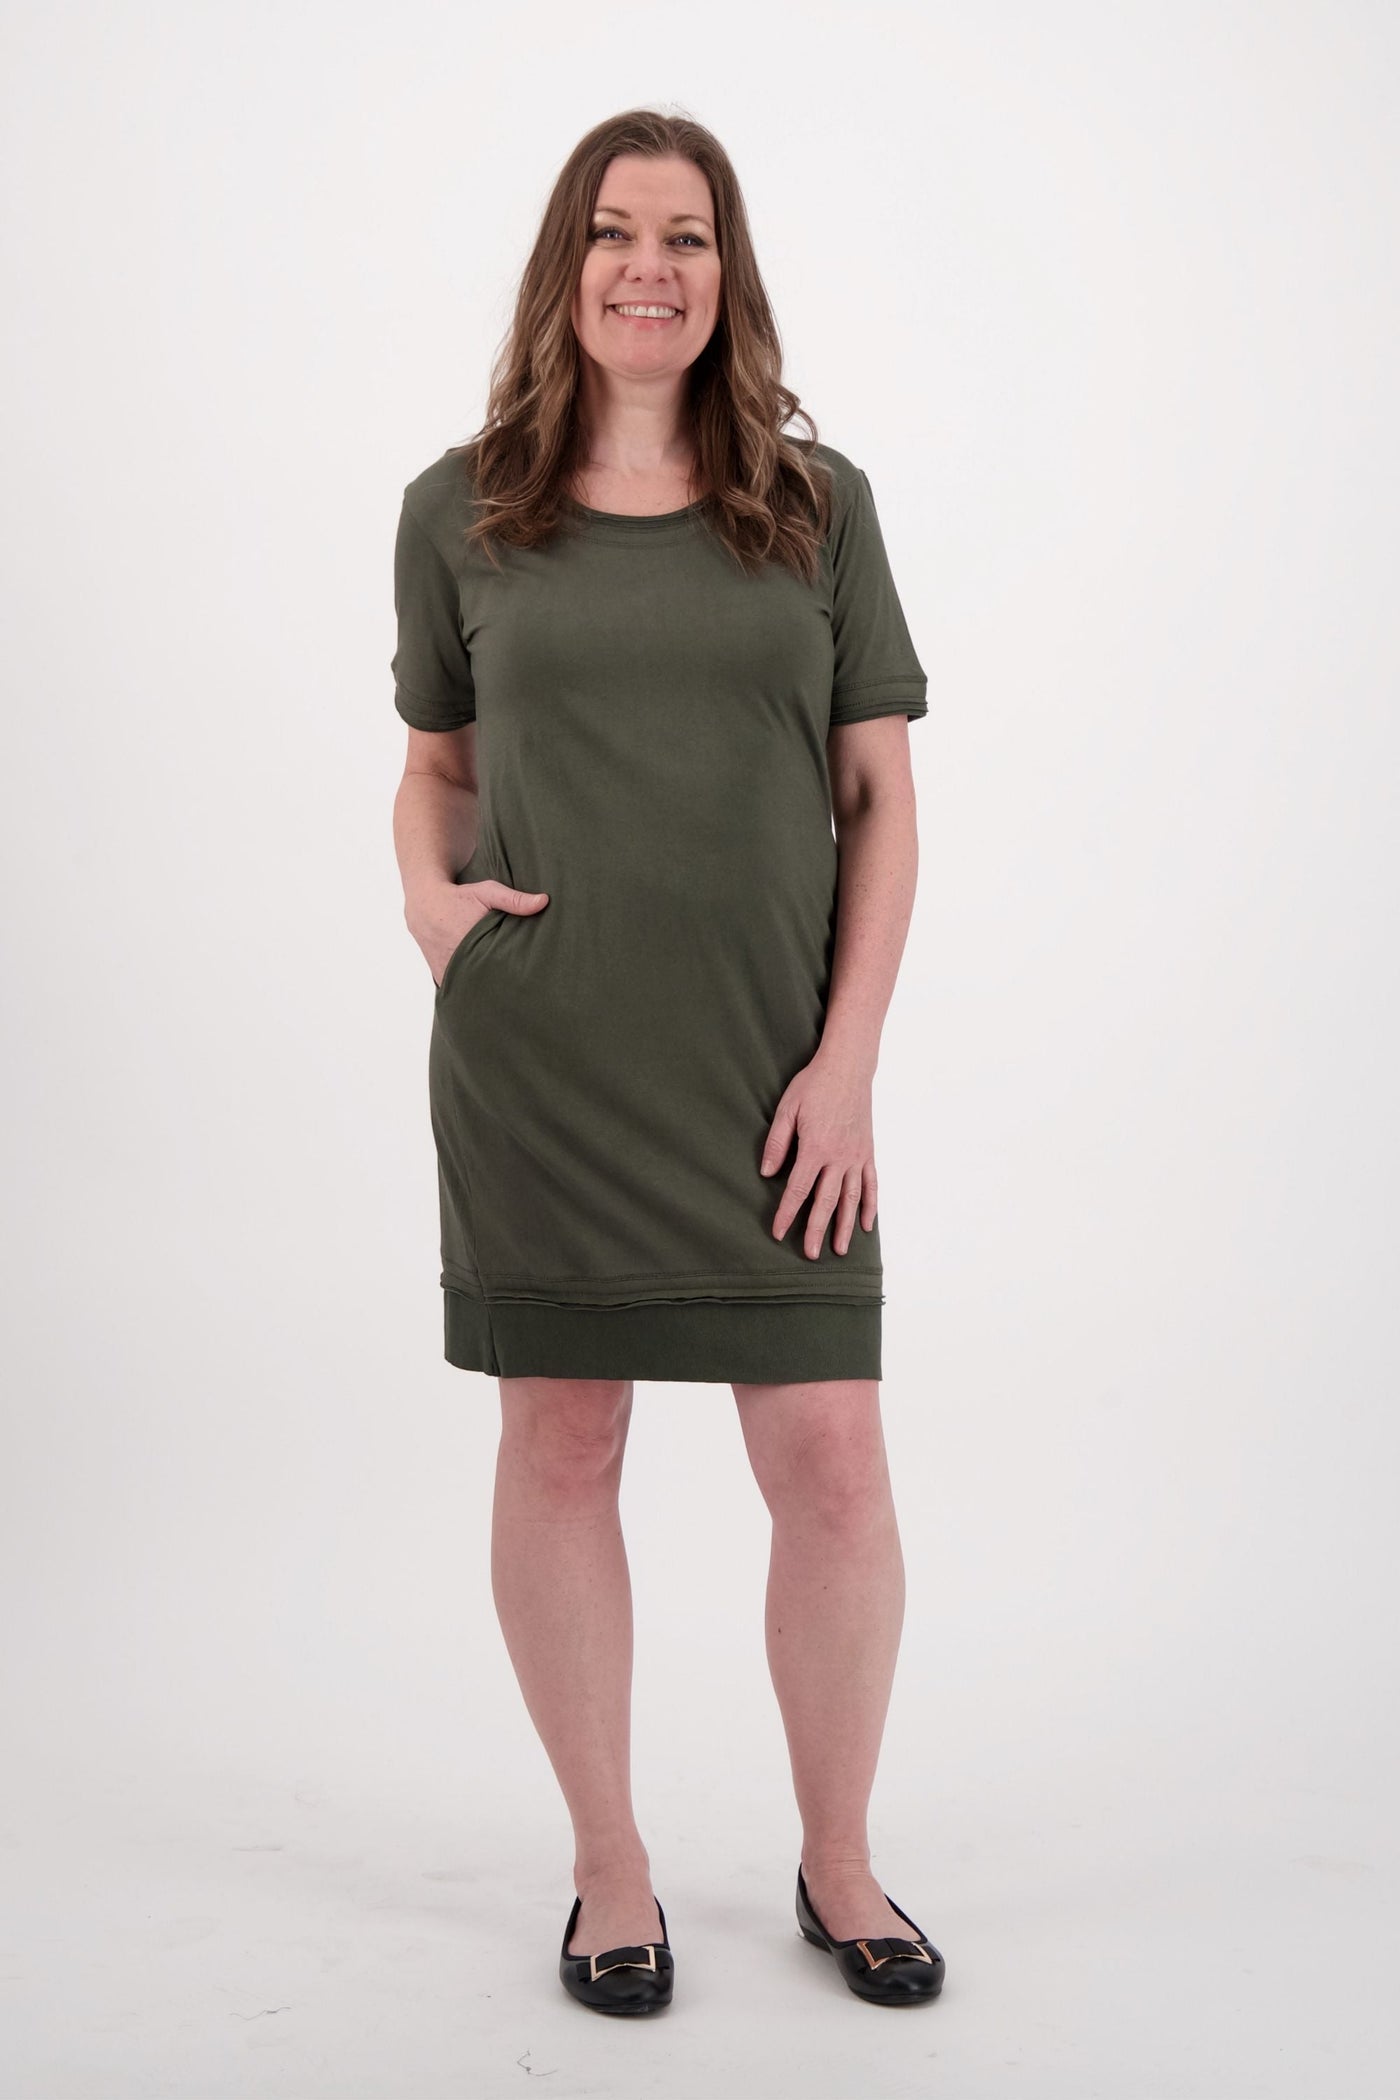 fairtrade certified olive green dress everyday wear